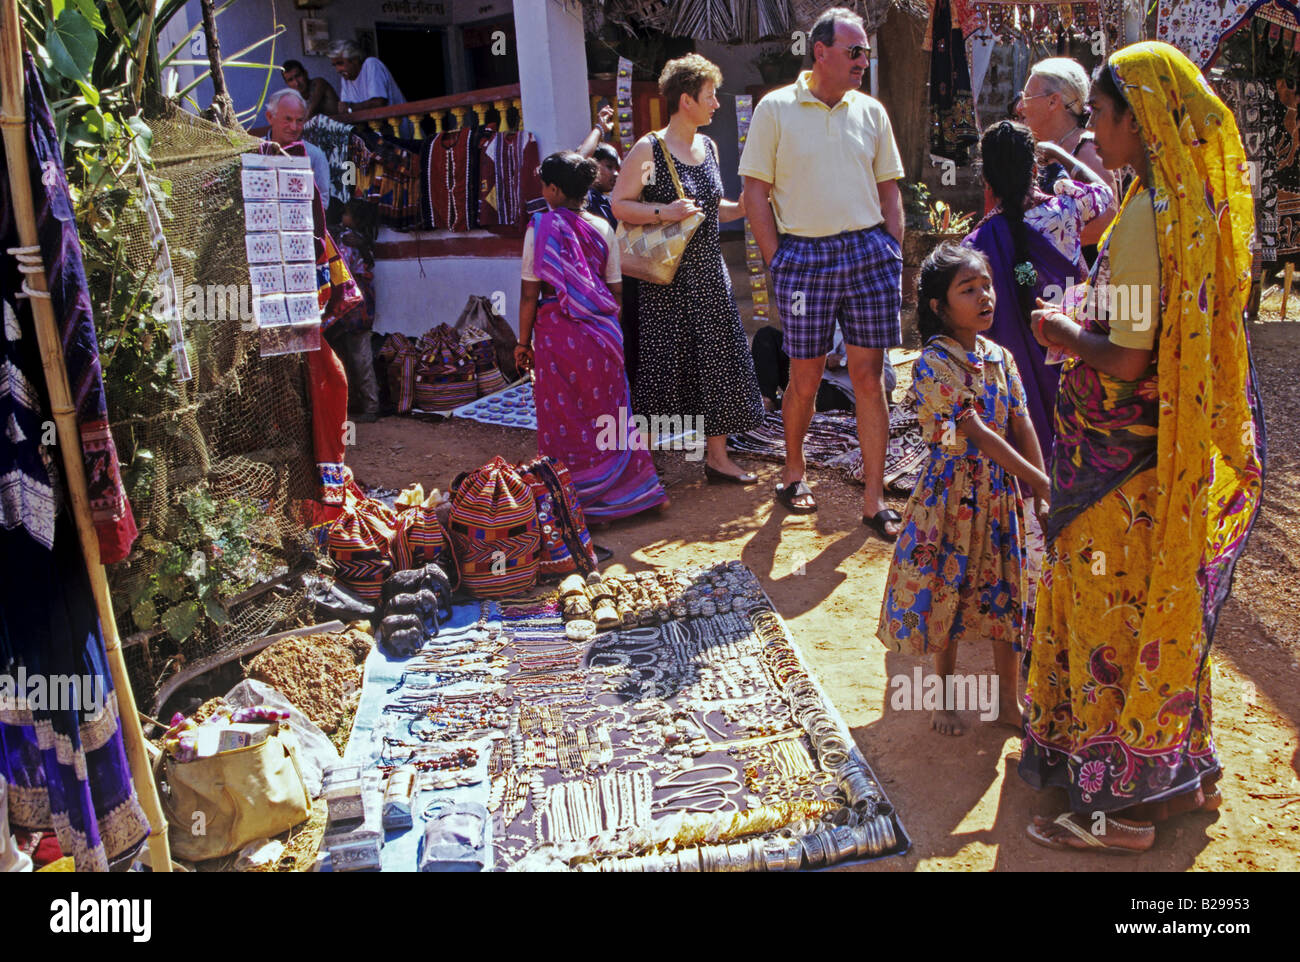 Markt Panjim Goa Staat Indien Datum 15 06 2008 Ref ZB548 115573 0141 obligatorische CREDIT Welt Bilder Photoshot Stockfoto